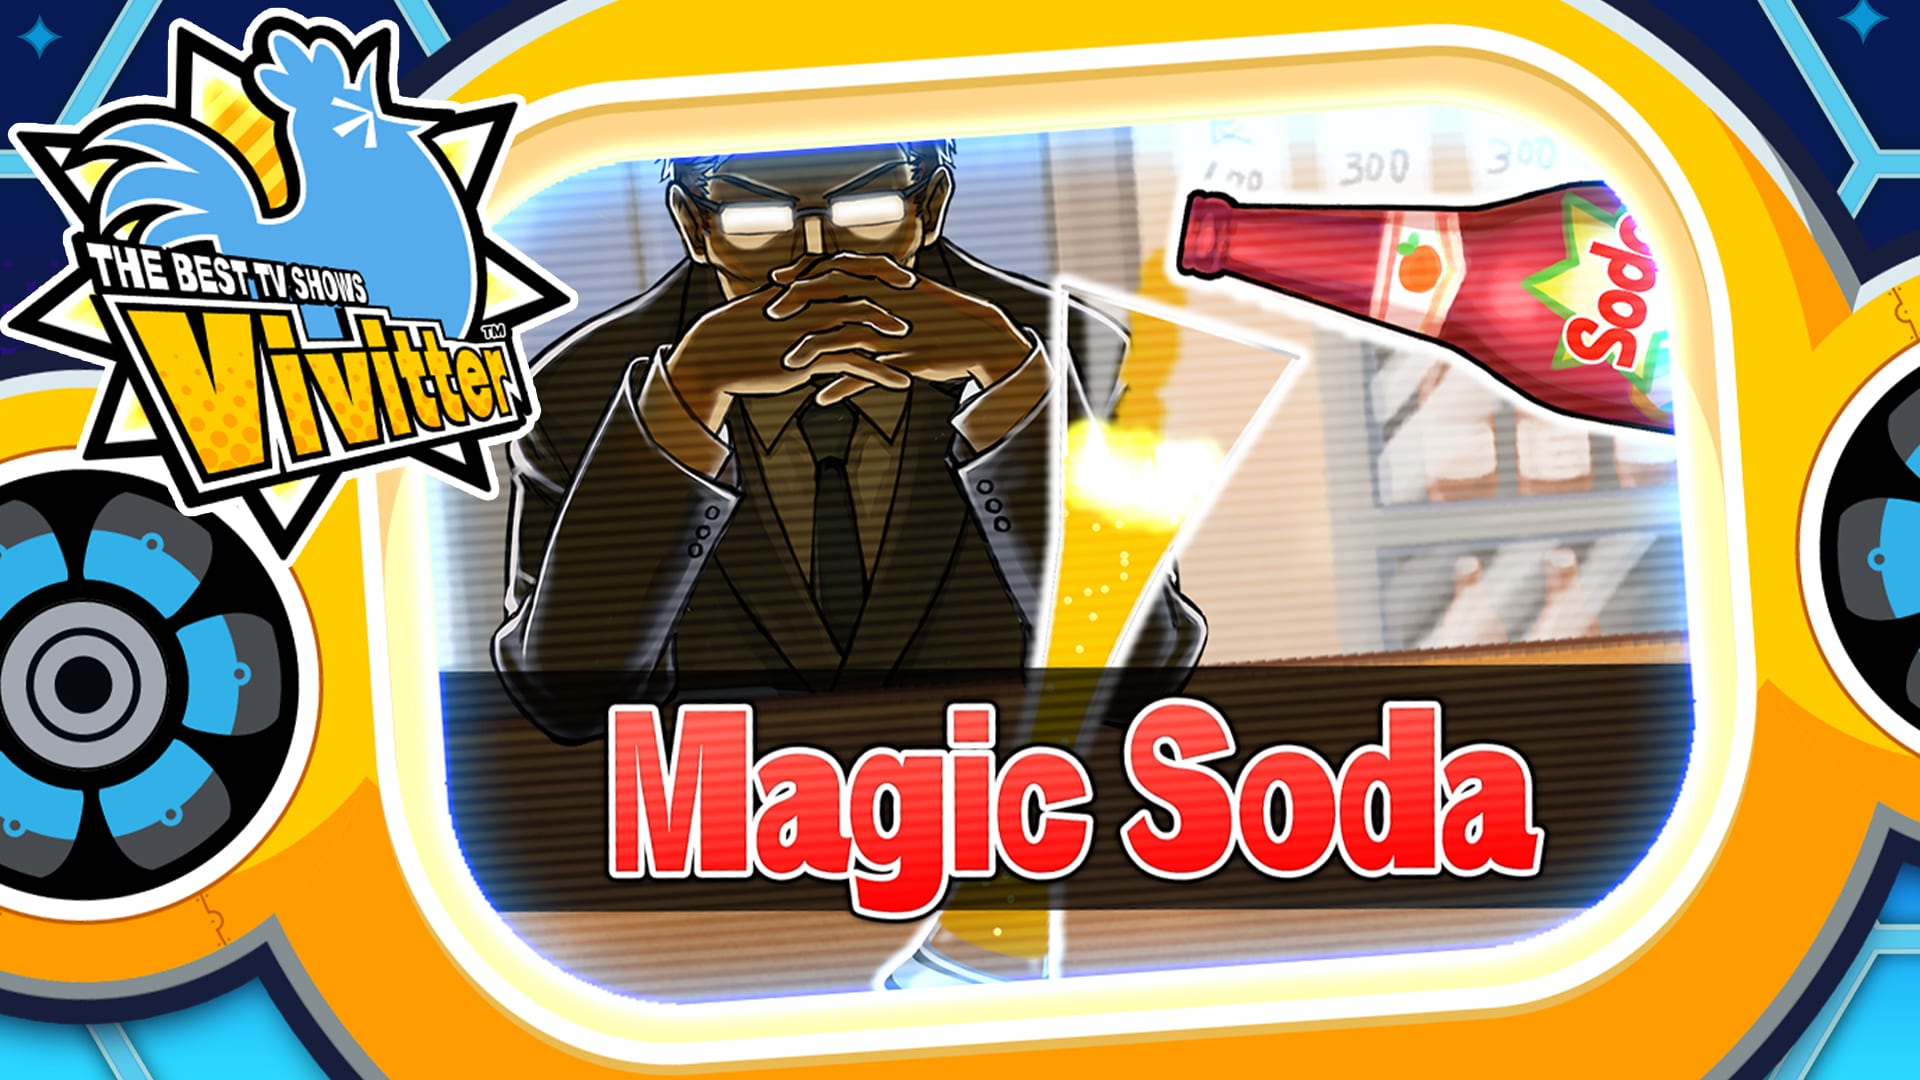 Additional mini-game "Magic Soda"